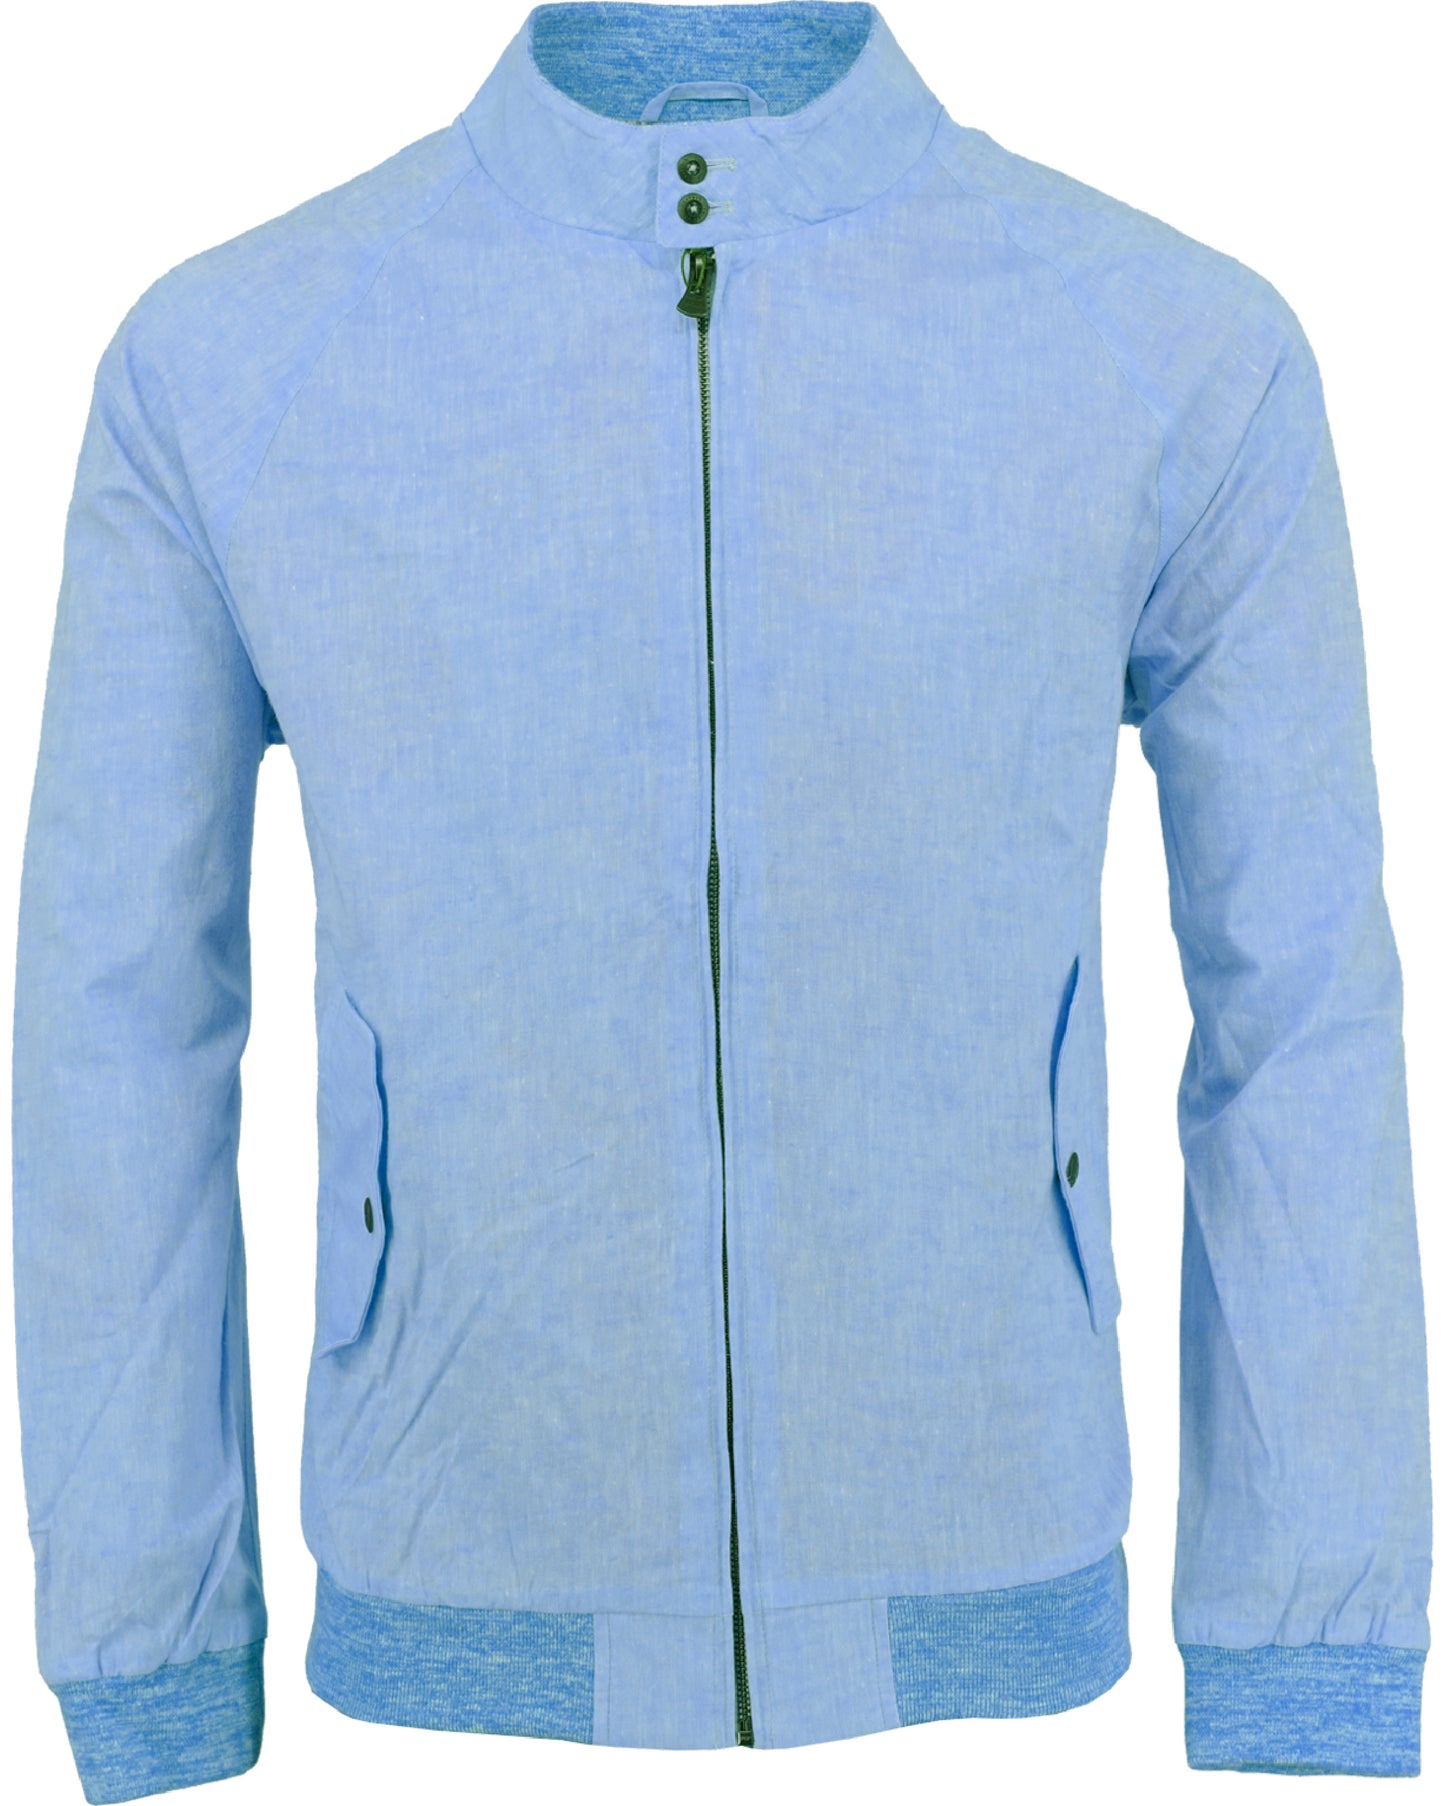 Harry Linen Blue Bomber Jacket